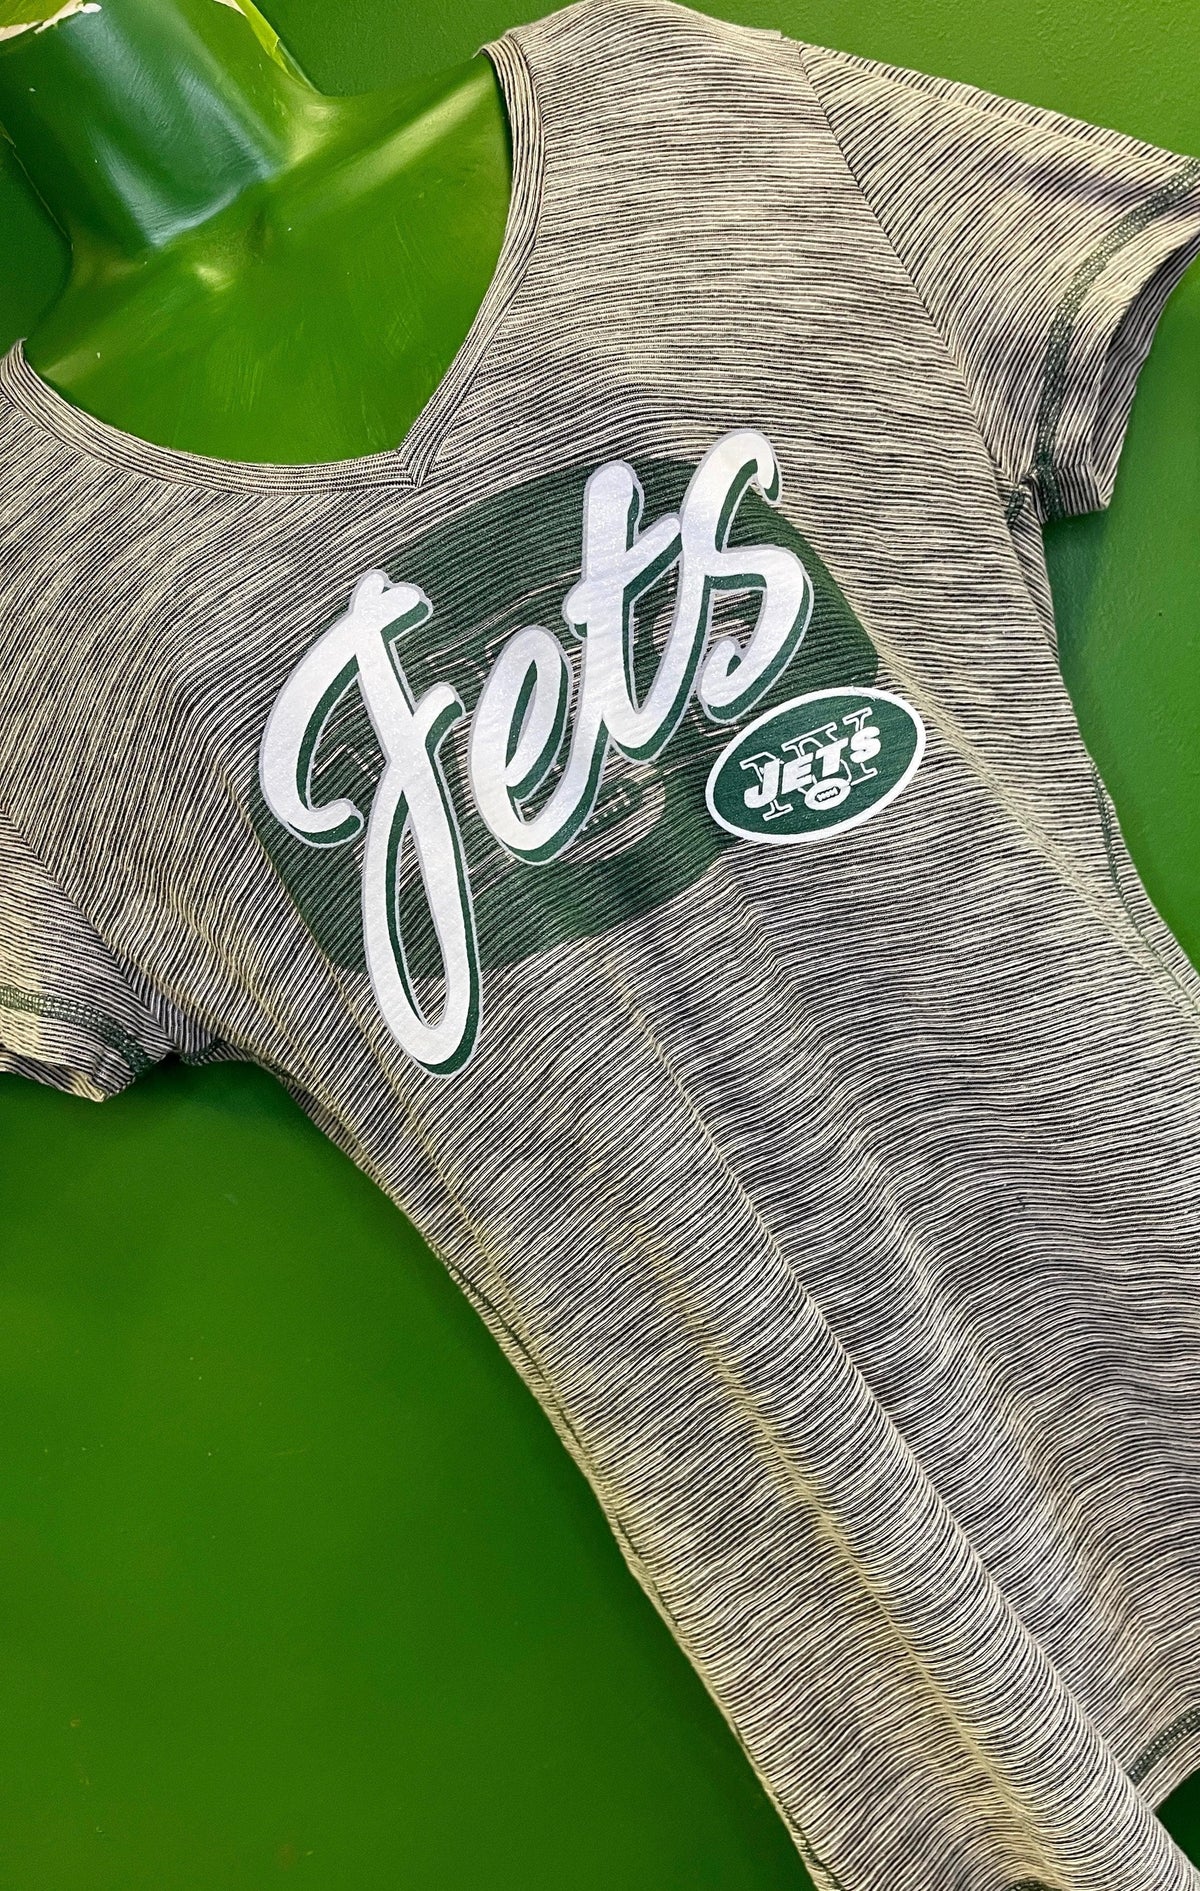 NFL New York Jets Space Dye V-Neck T-Shirt Women's Large NWT